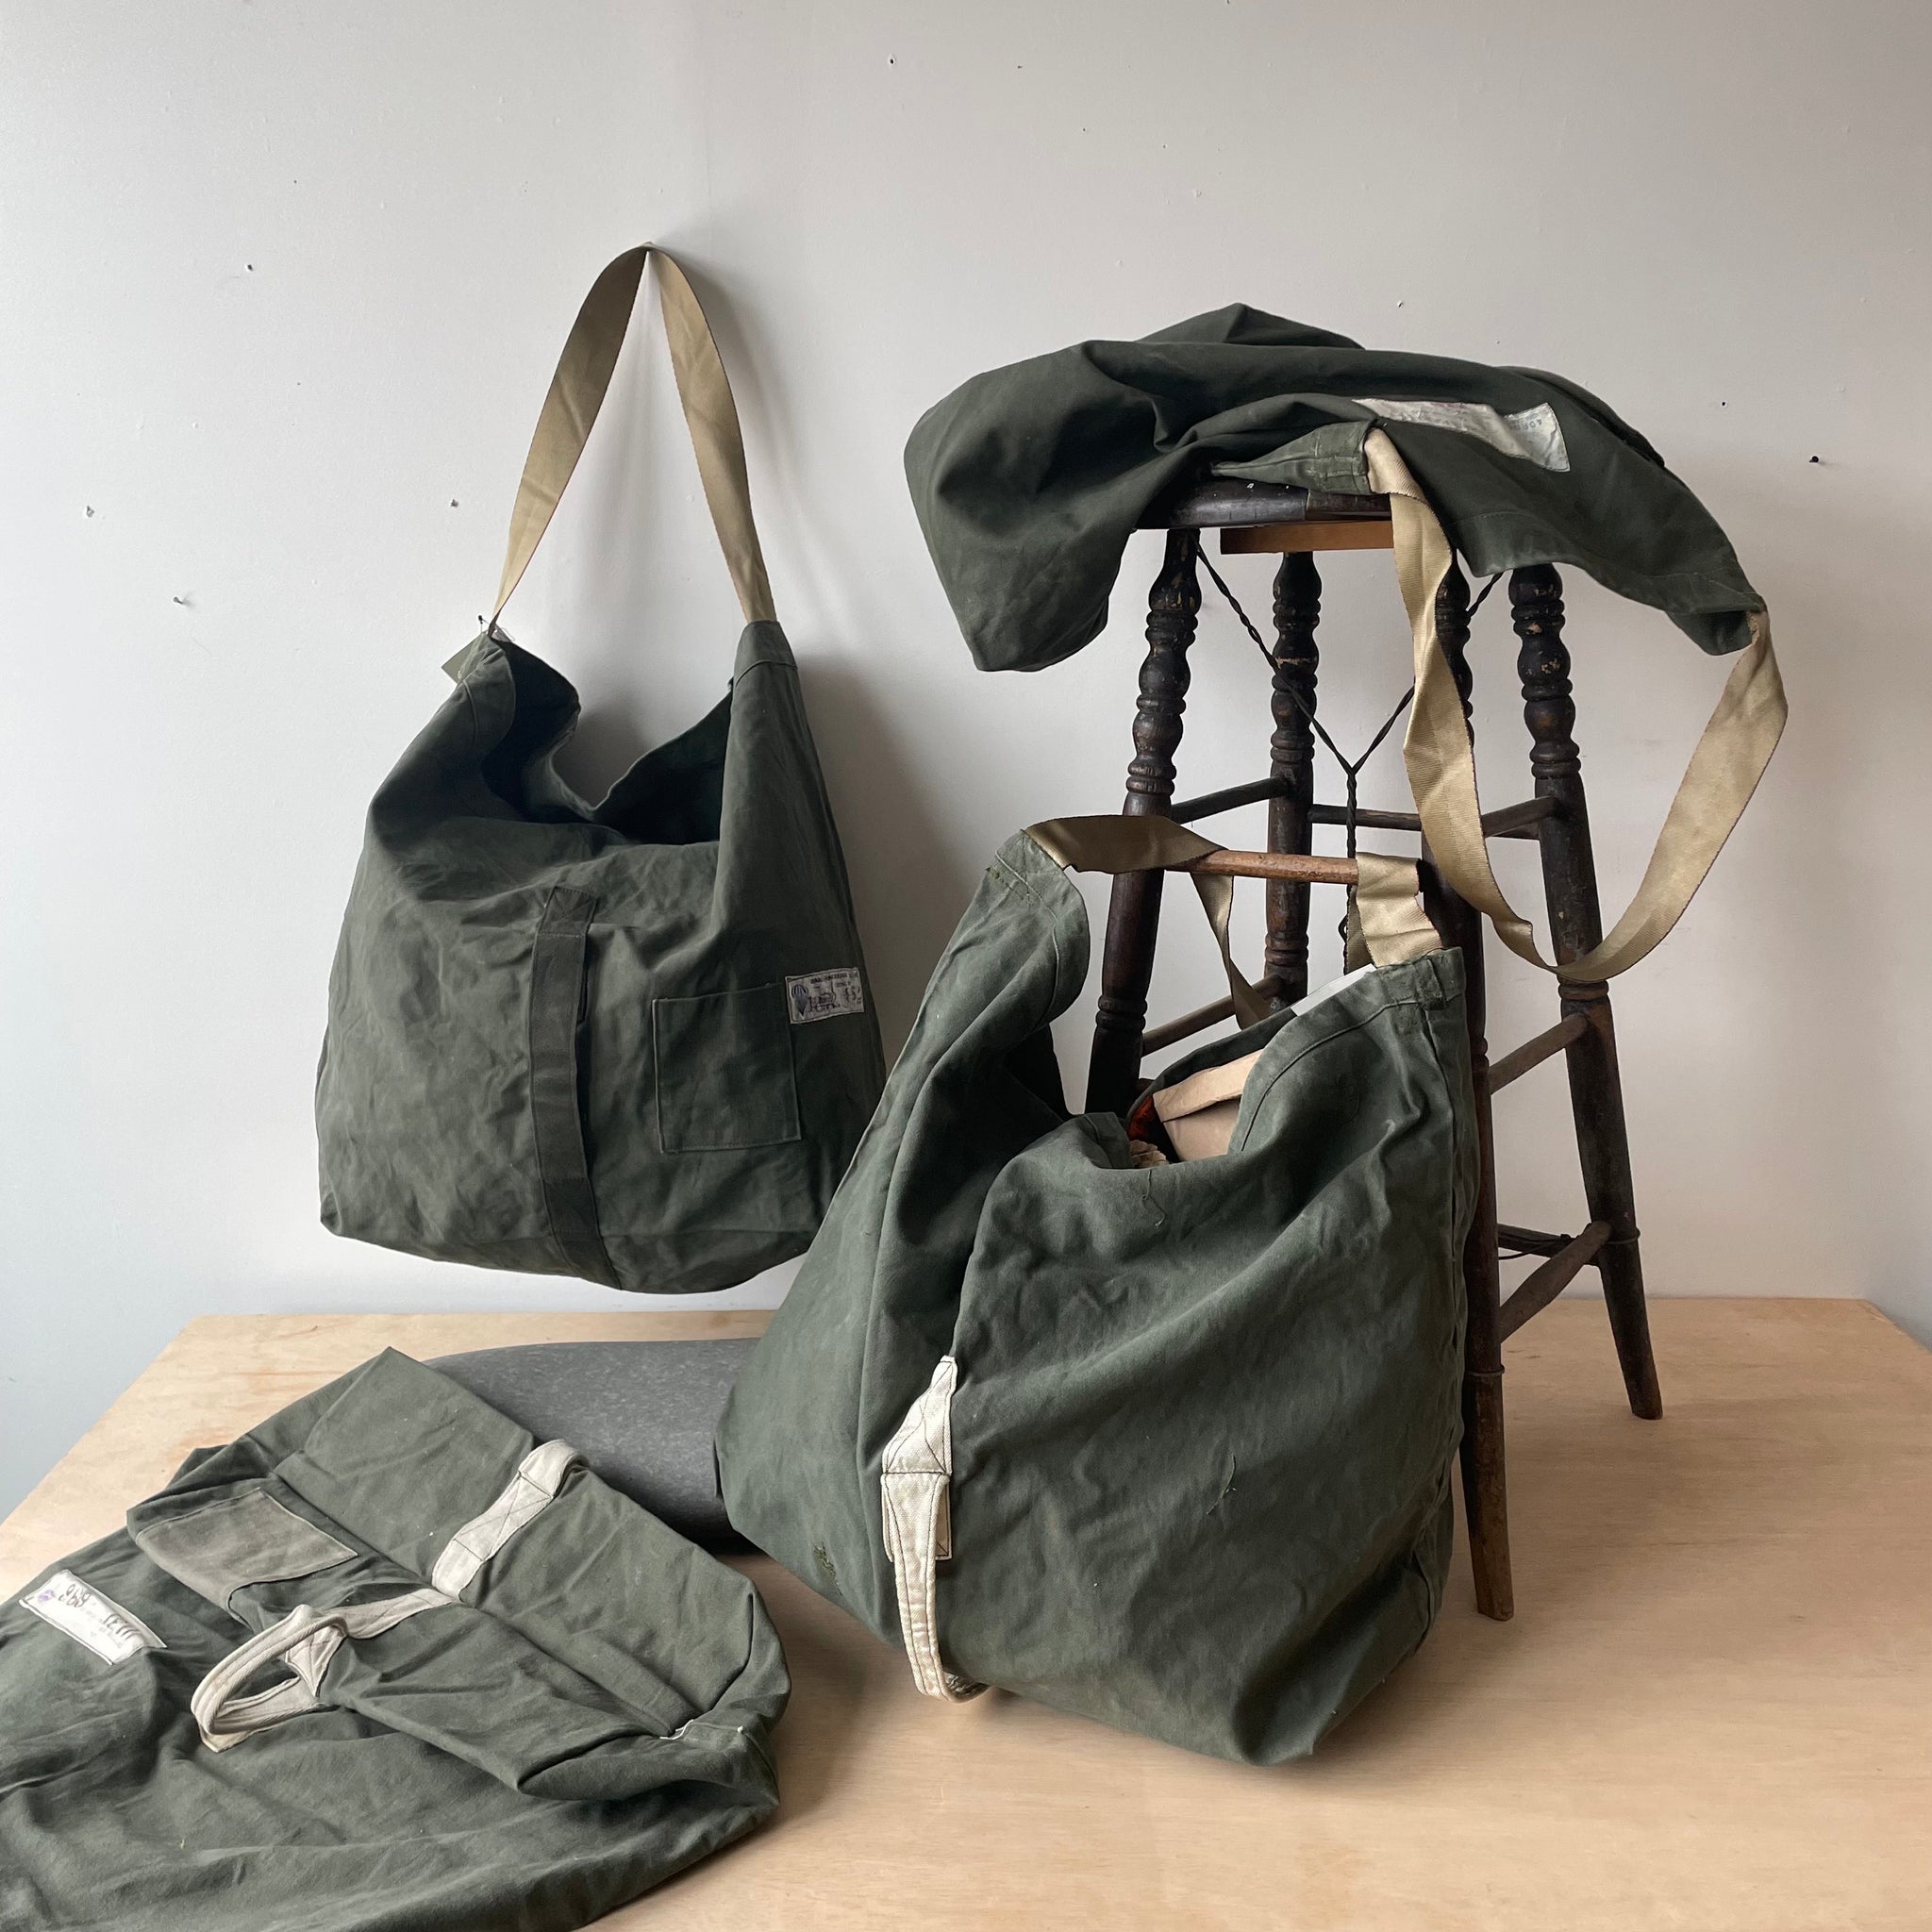 Assorted vintage-style crossbody bag